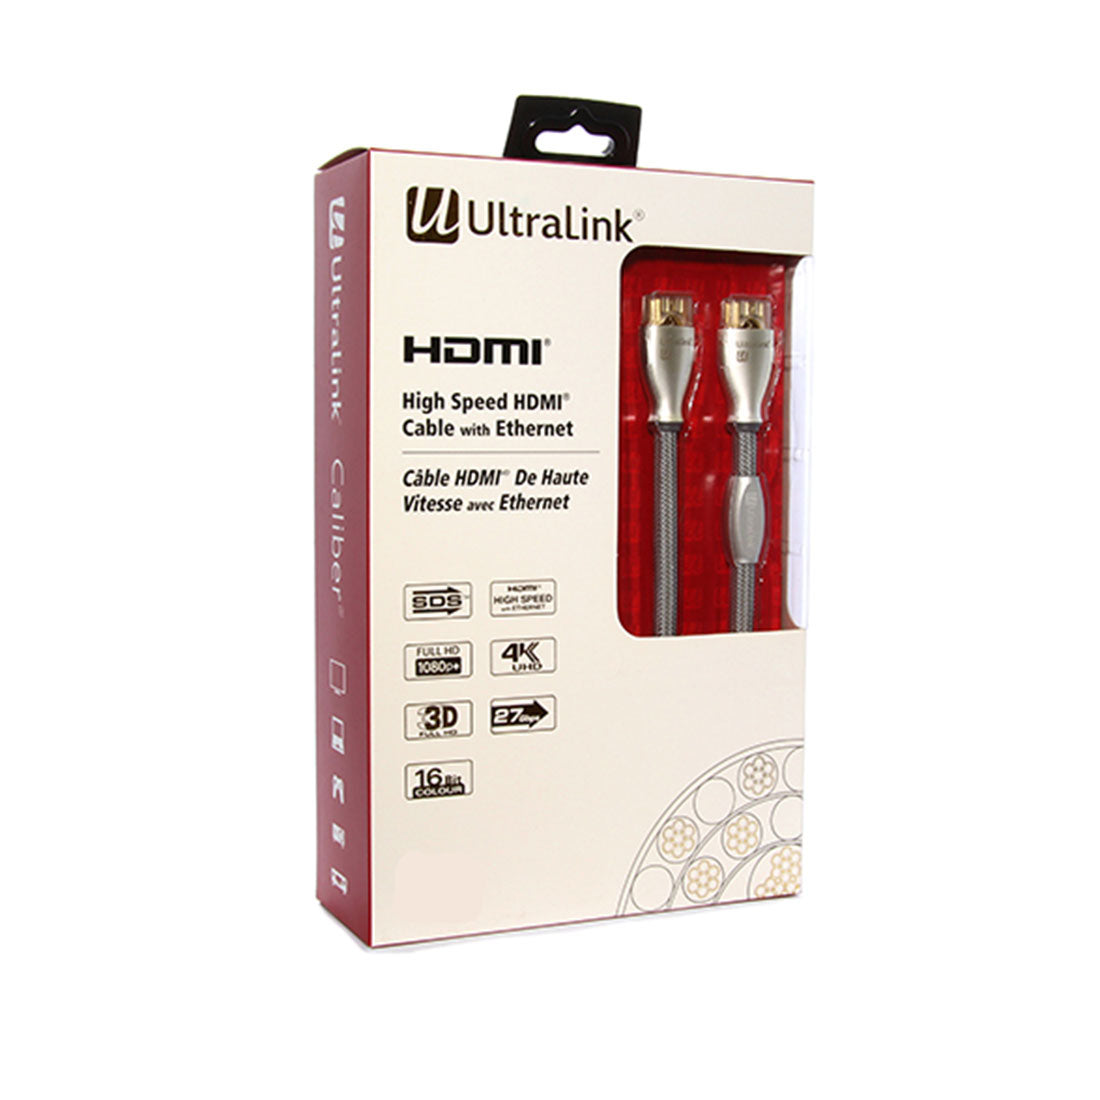 Ultralink UHD6M Caliber HDMI Cable – 6 Metres